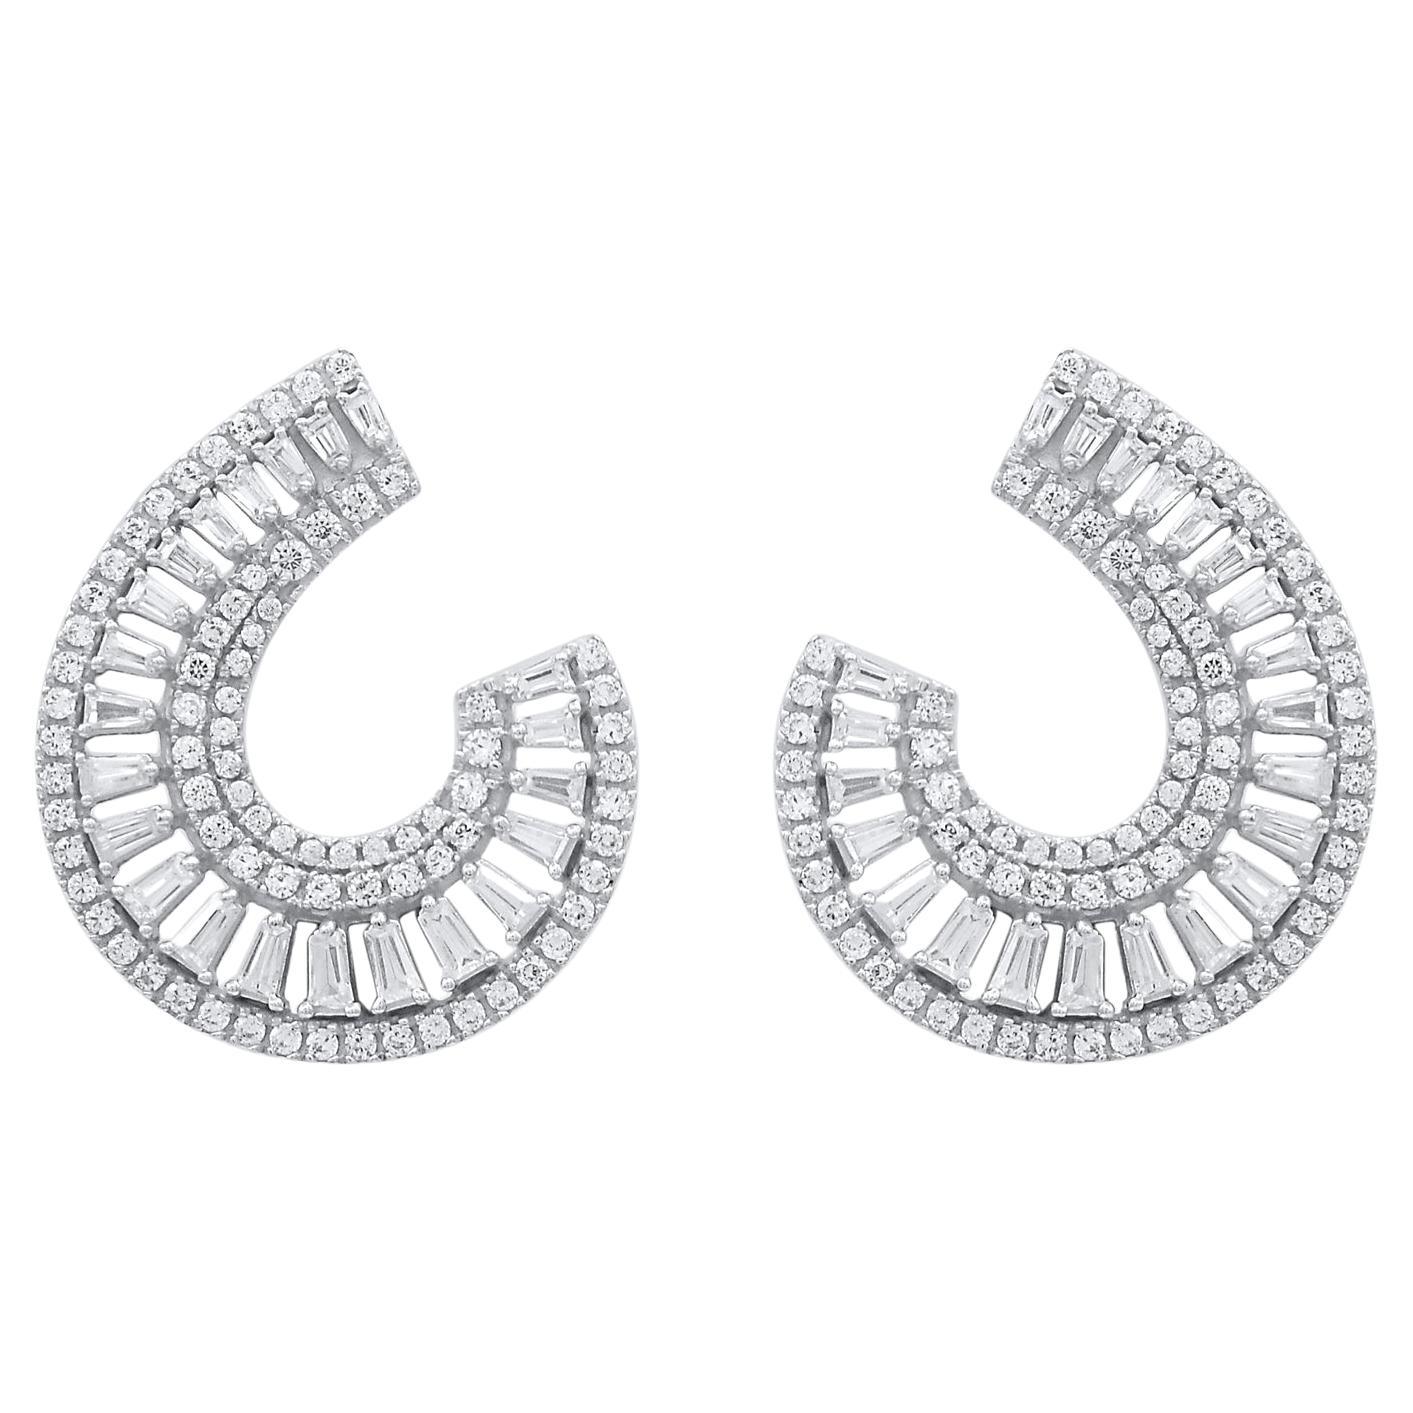 TJD 1.0 Carat Round & Baguette Cut Diamond 14 Karat White Gold Stud Earrings